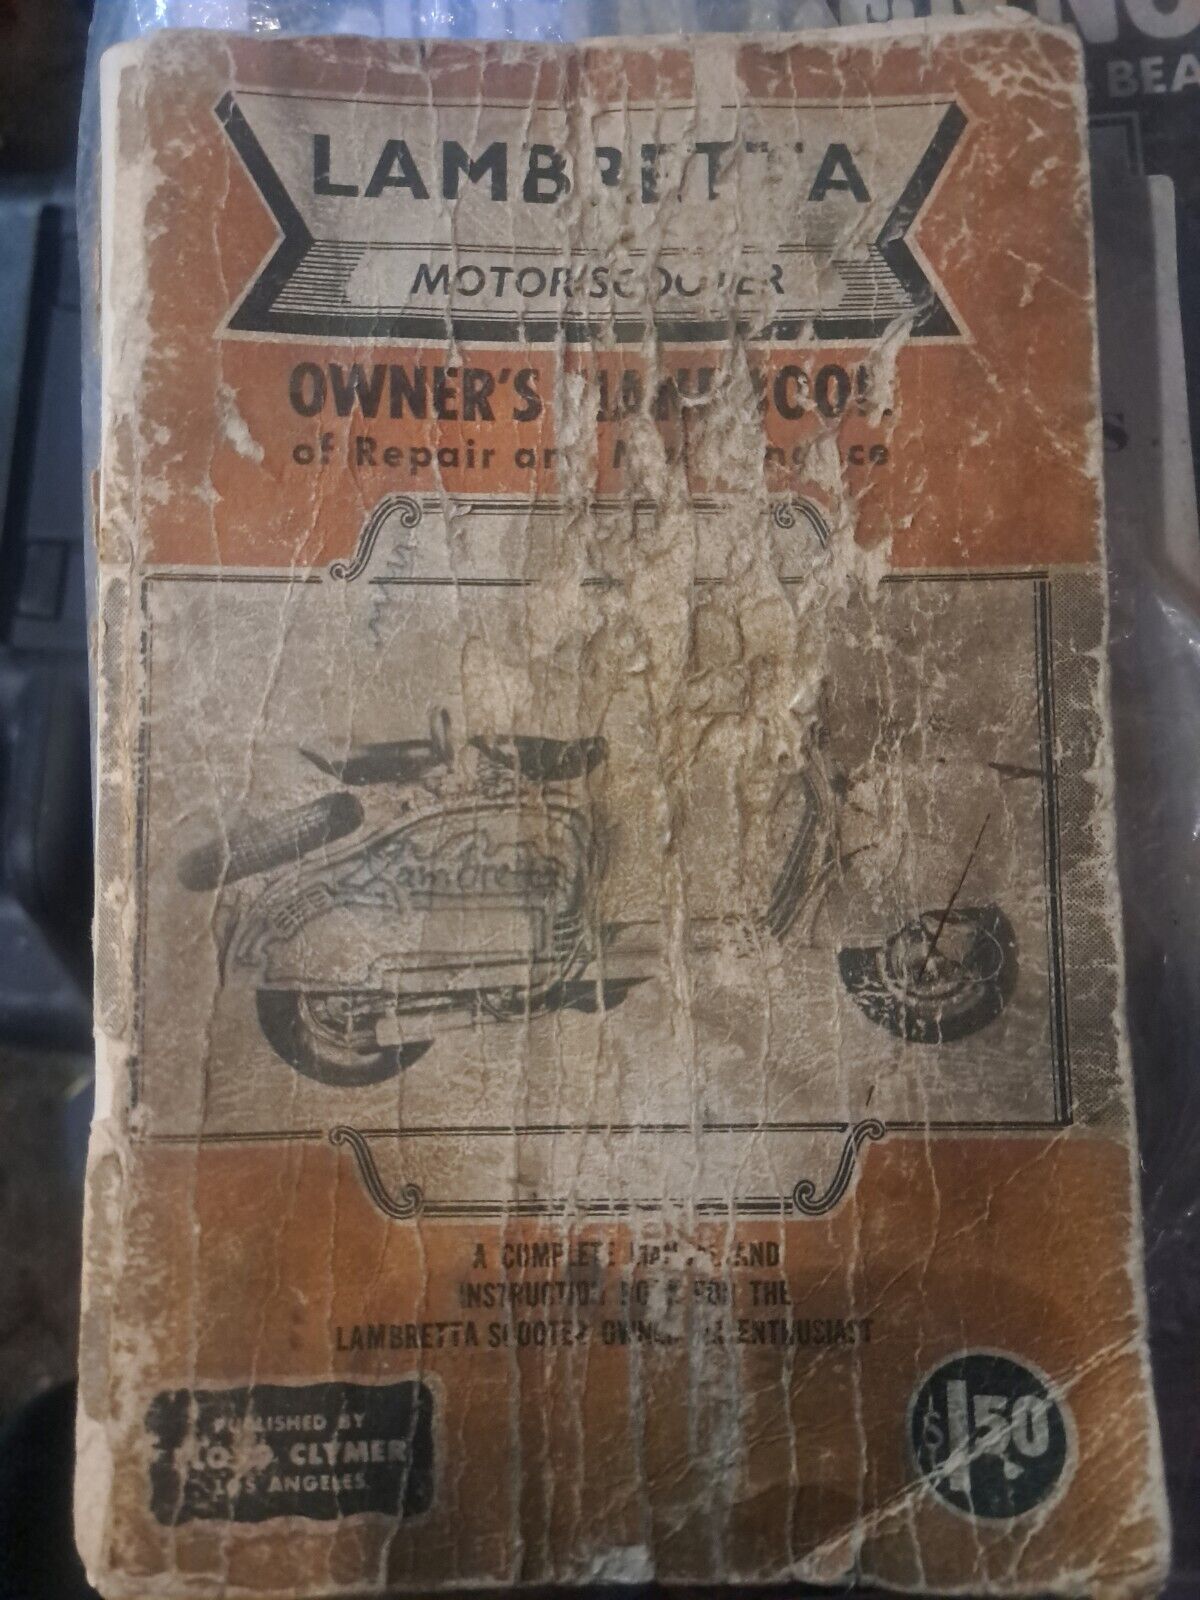 Vintage LAMBRETTA Motor Scooter Moped Owner\'s Handbook book by Floyd Clymer Bad